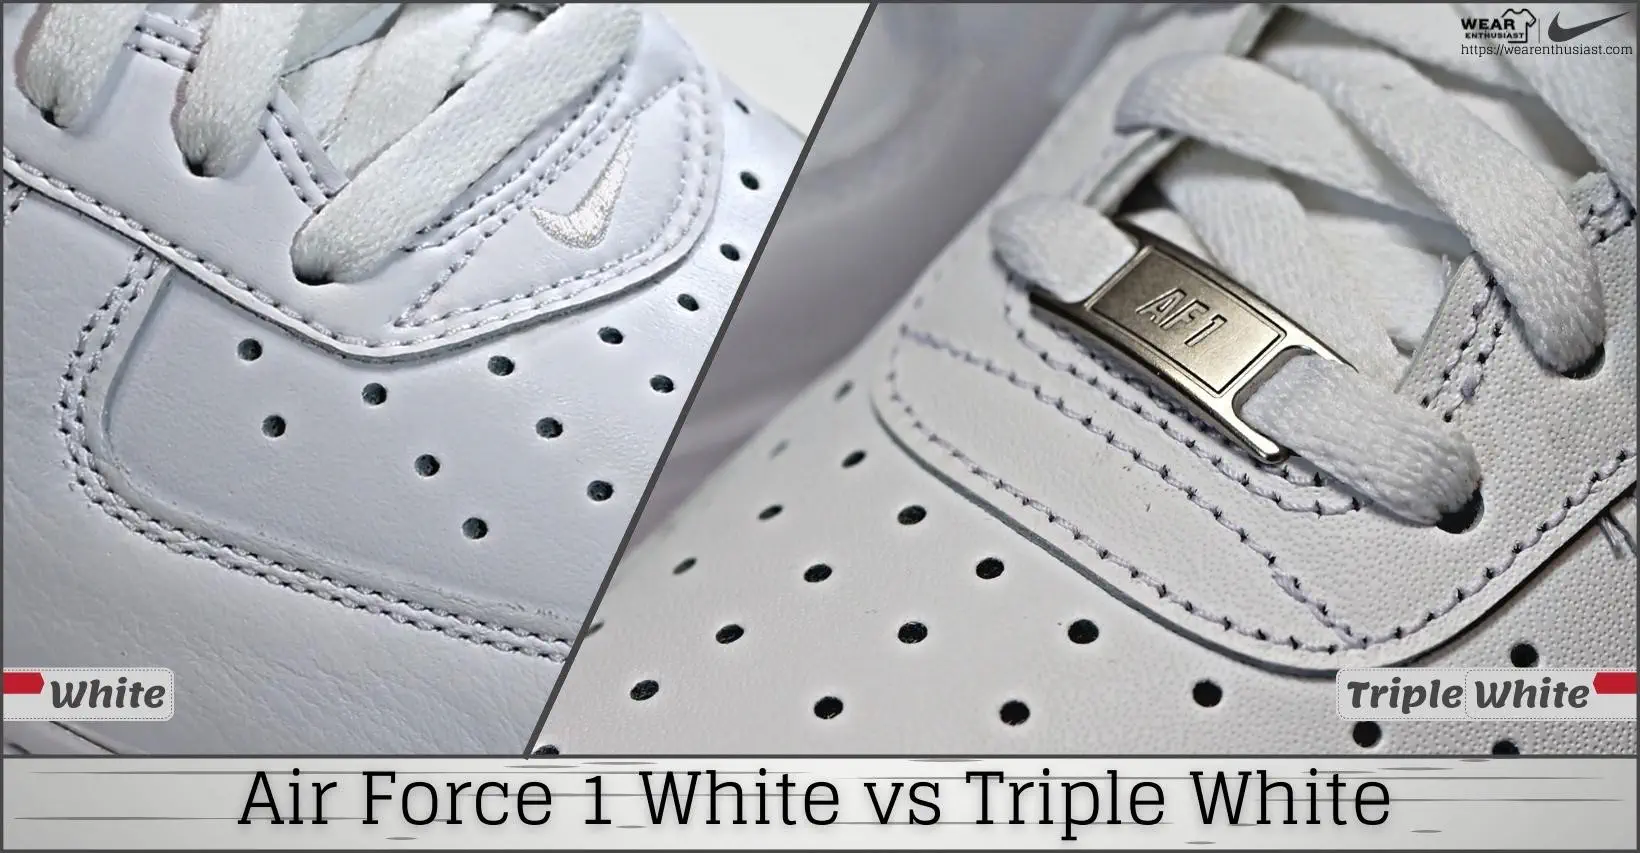 Air Force 1 White vs Triple White